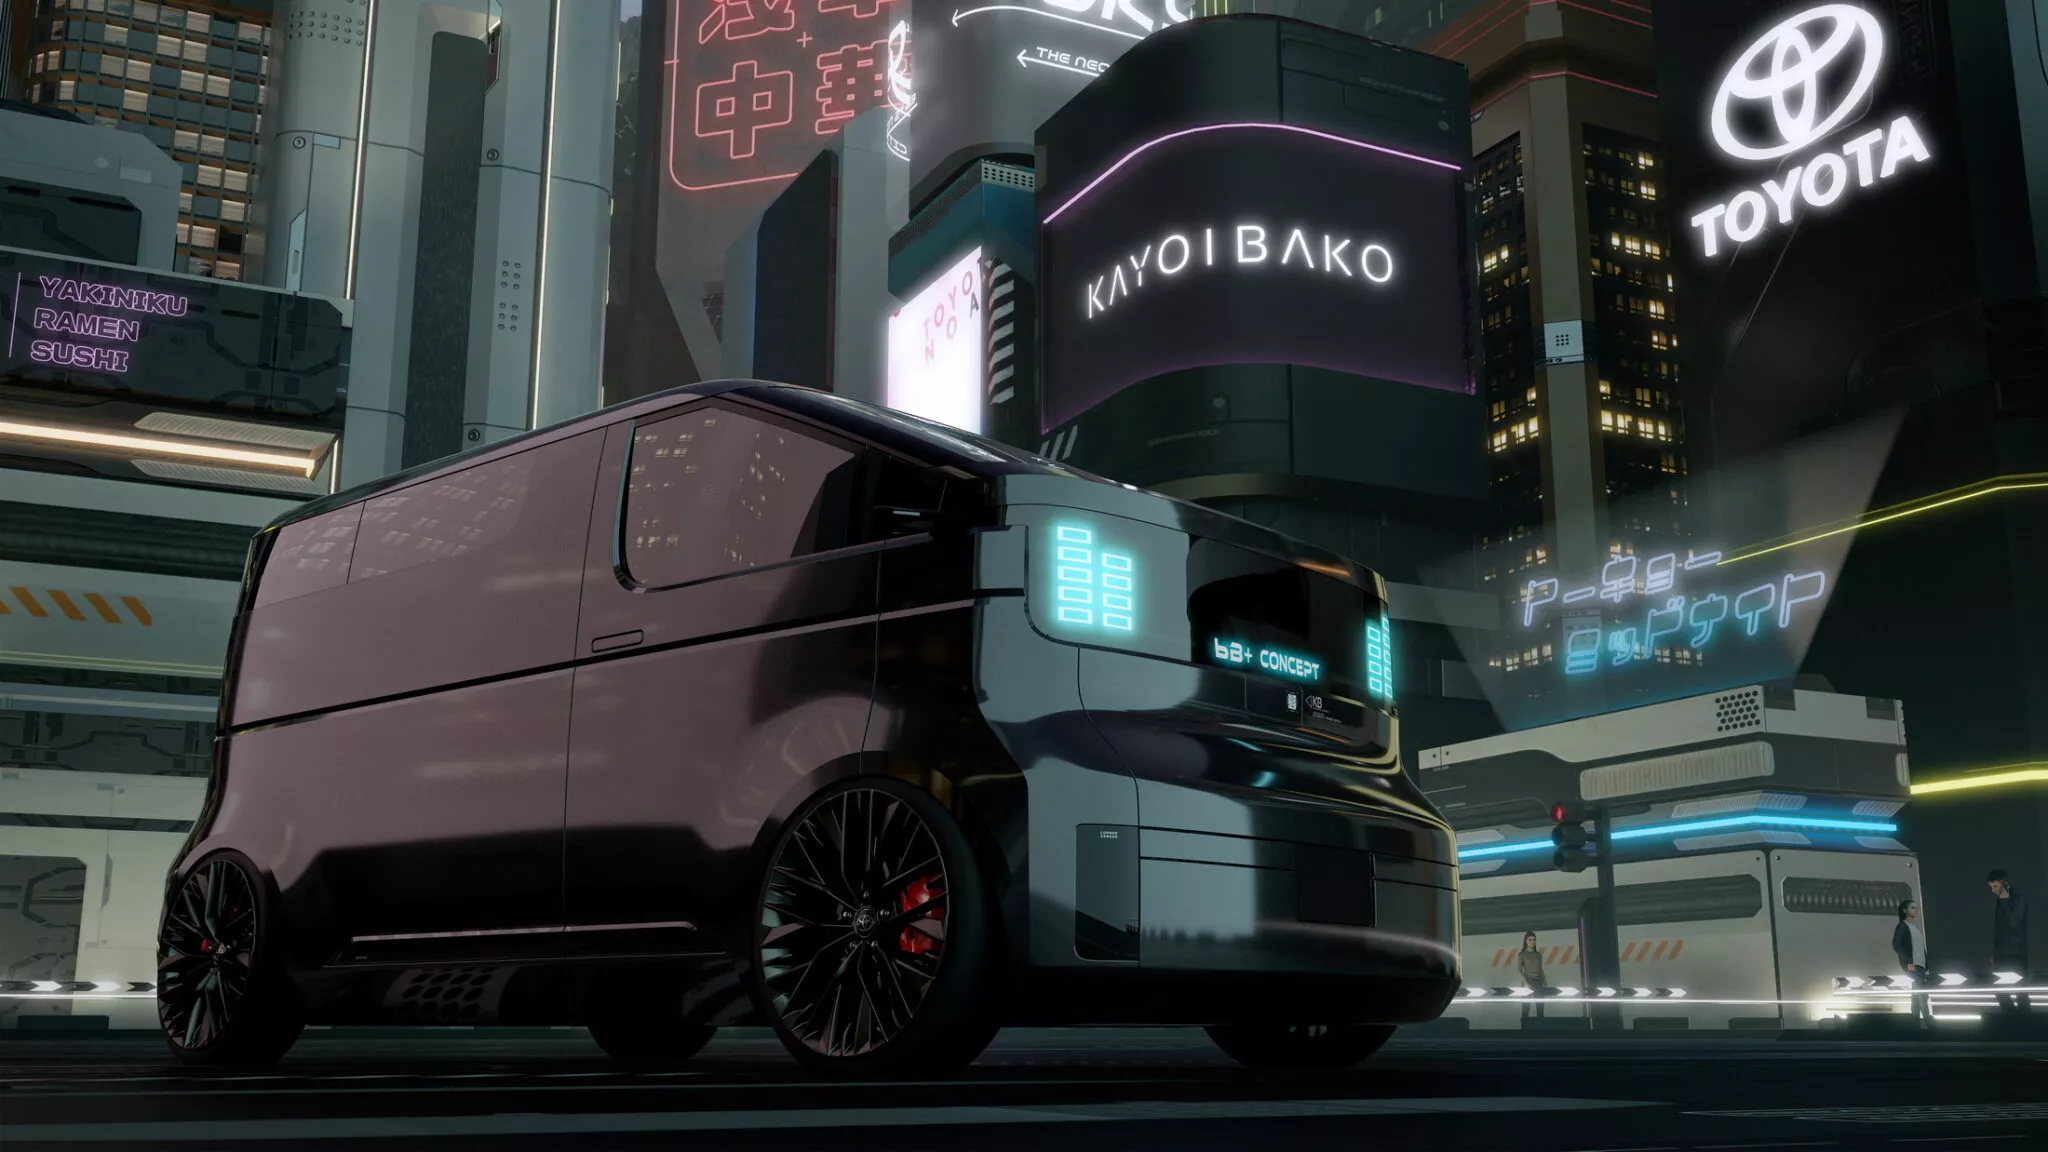 Toyota Kayoibako, Konsep Minivan EV Kaum Urban Masa Depan